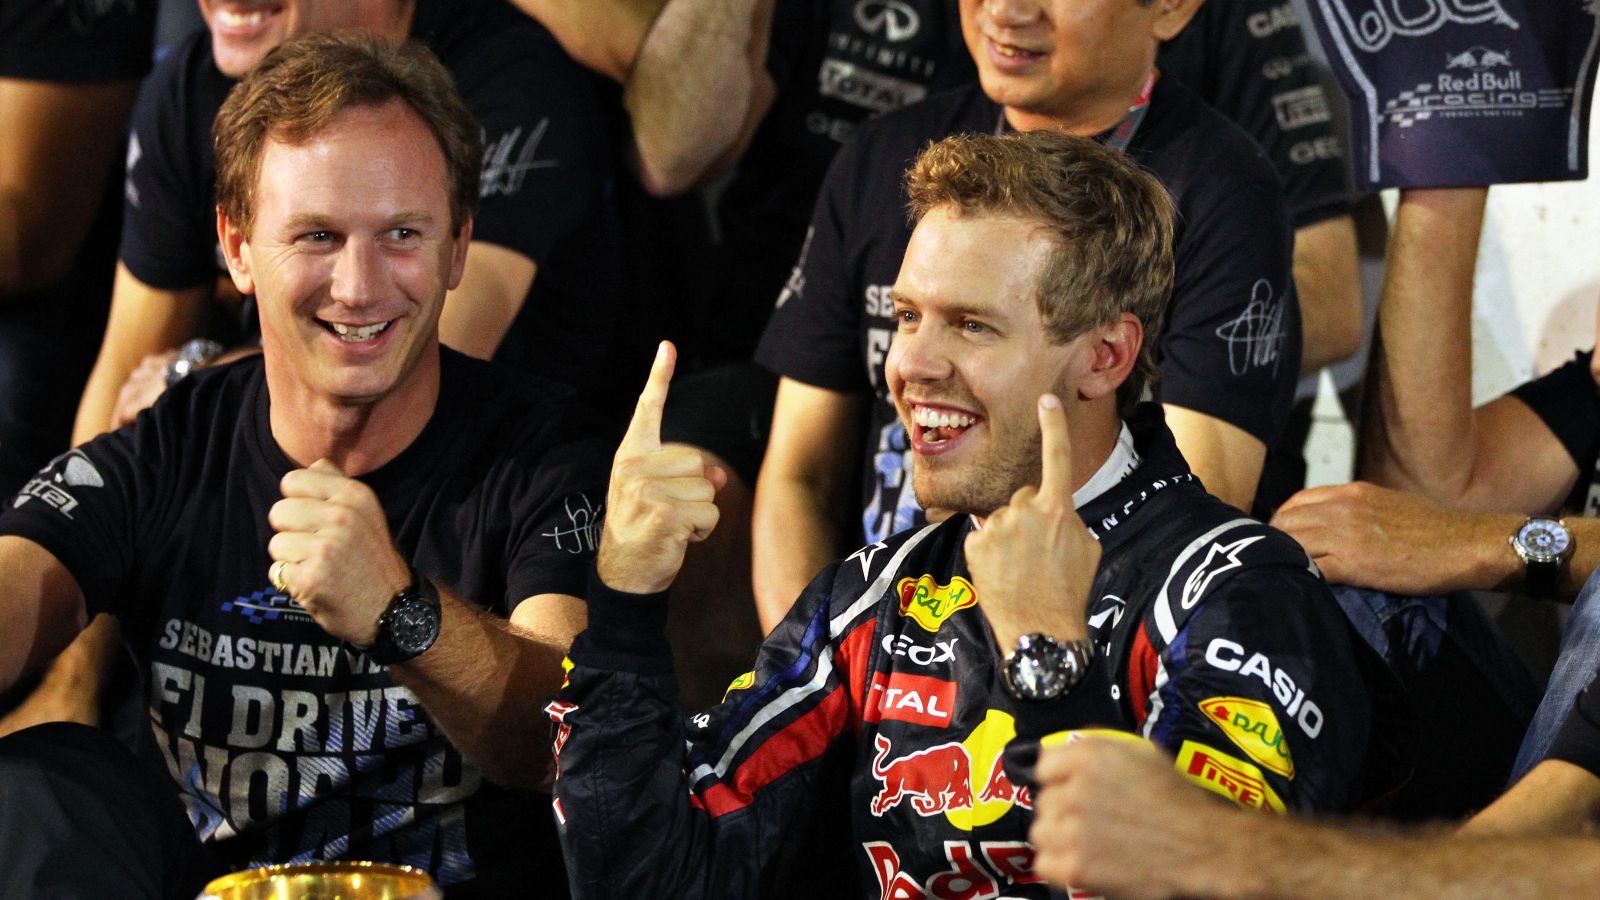 Christian Horner smiles at Sebastian Vettel. Suzuka, October 2011.